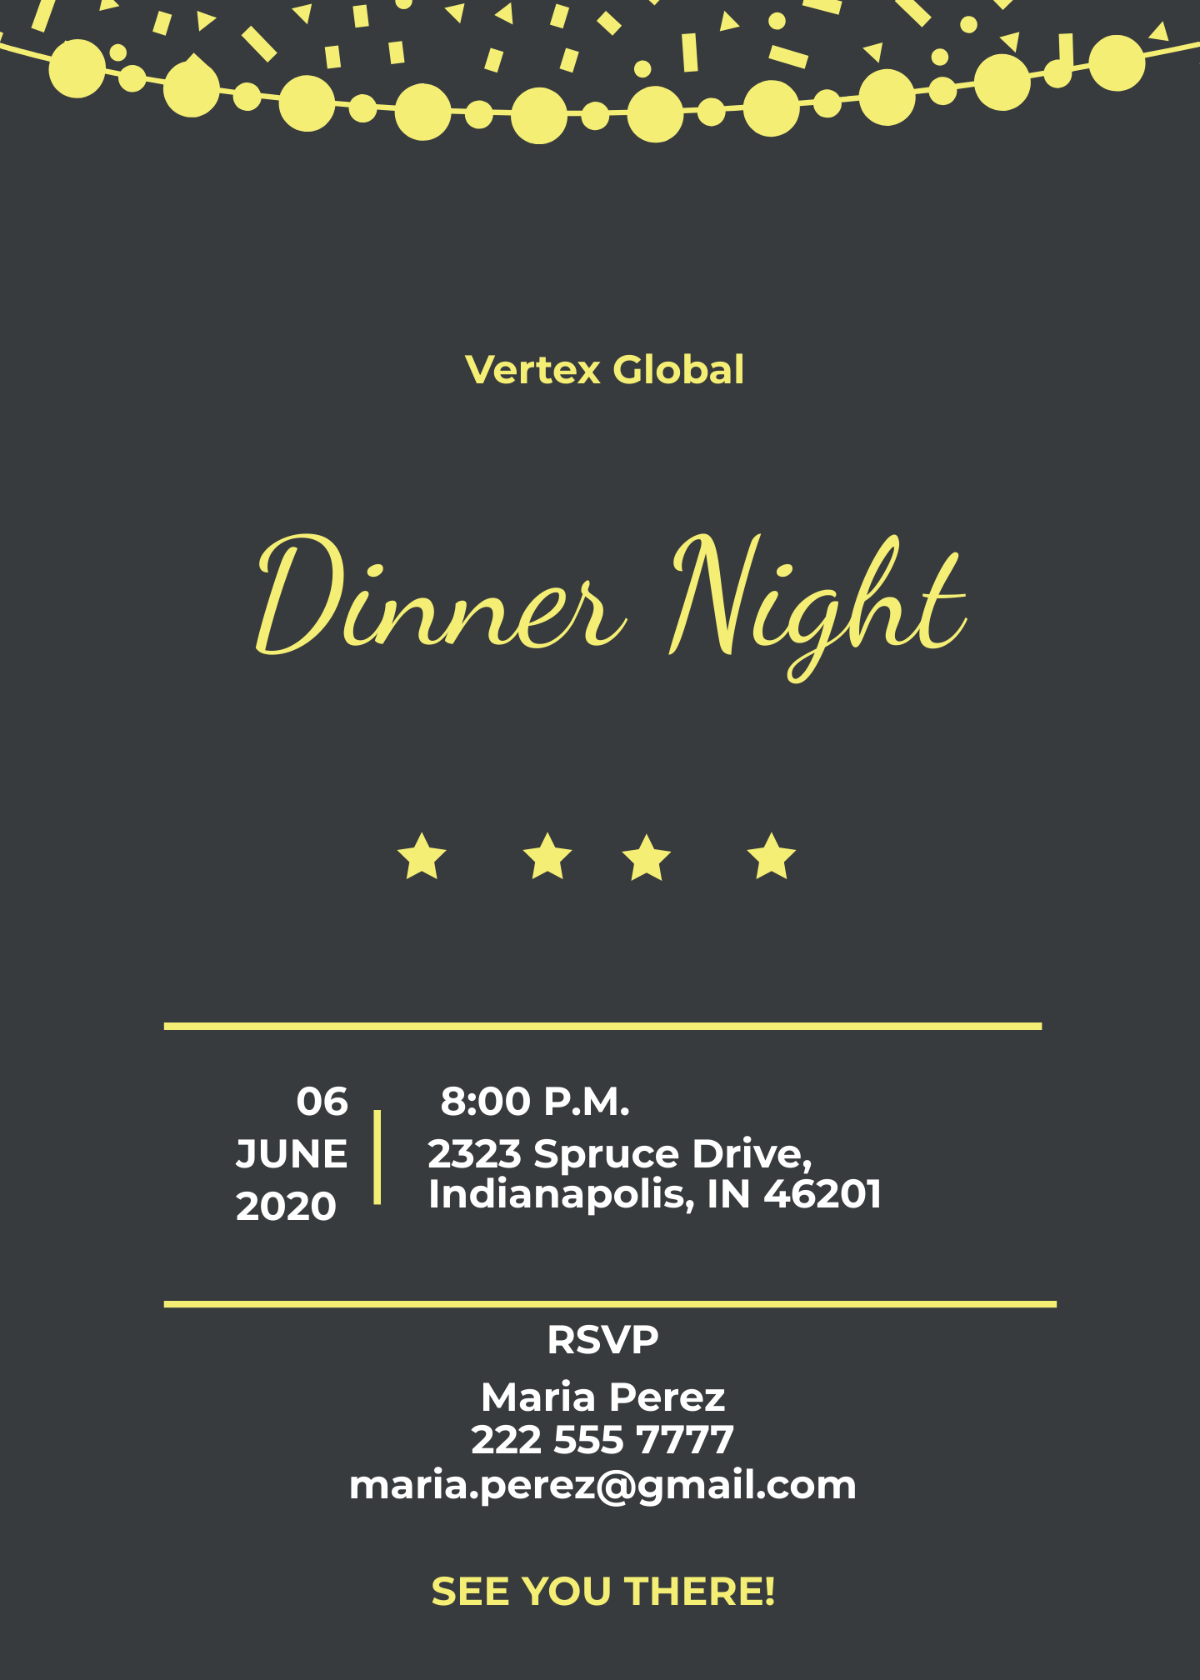 Company Dinner Night Invitation